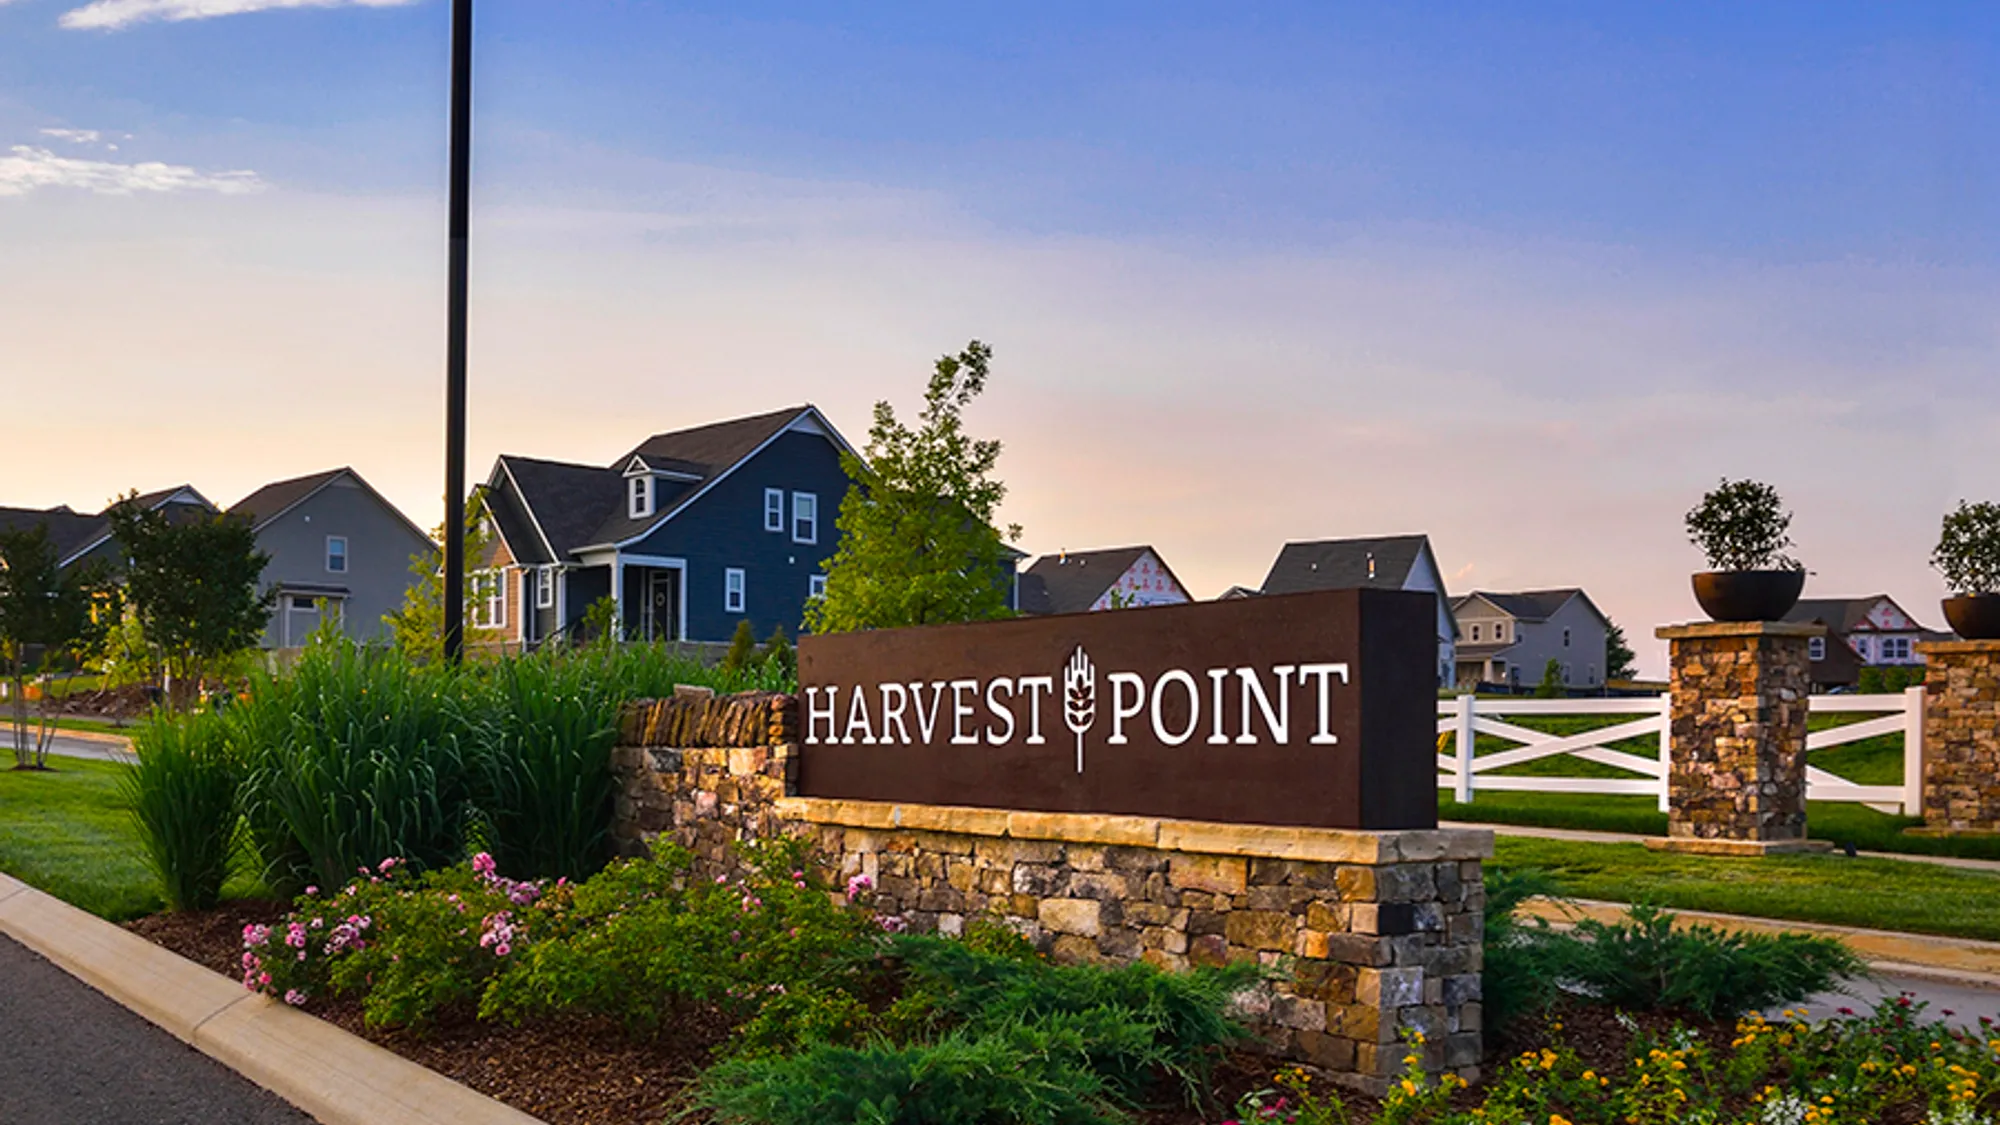 Harvest Point Entrance Monument at sunset